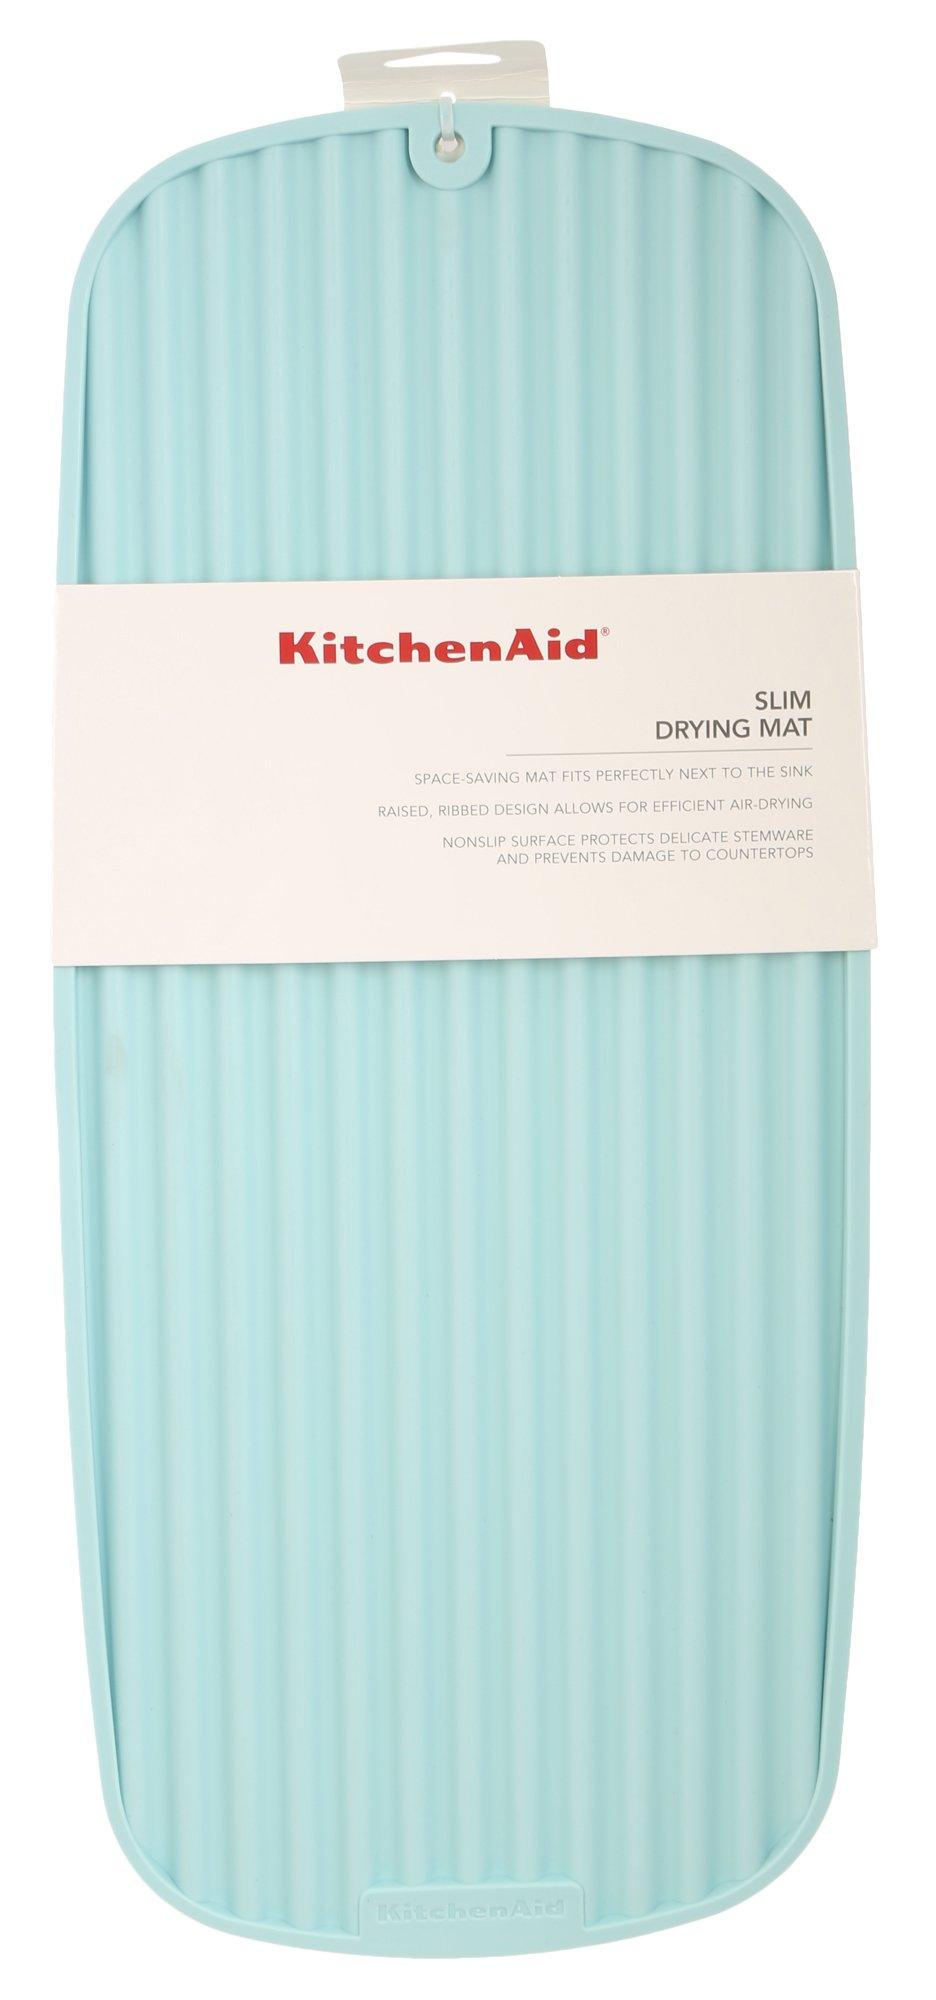 KitchenAid Slim Drying Mat